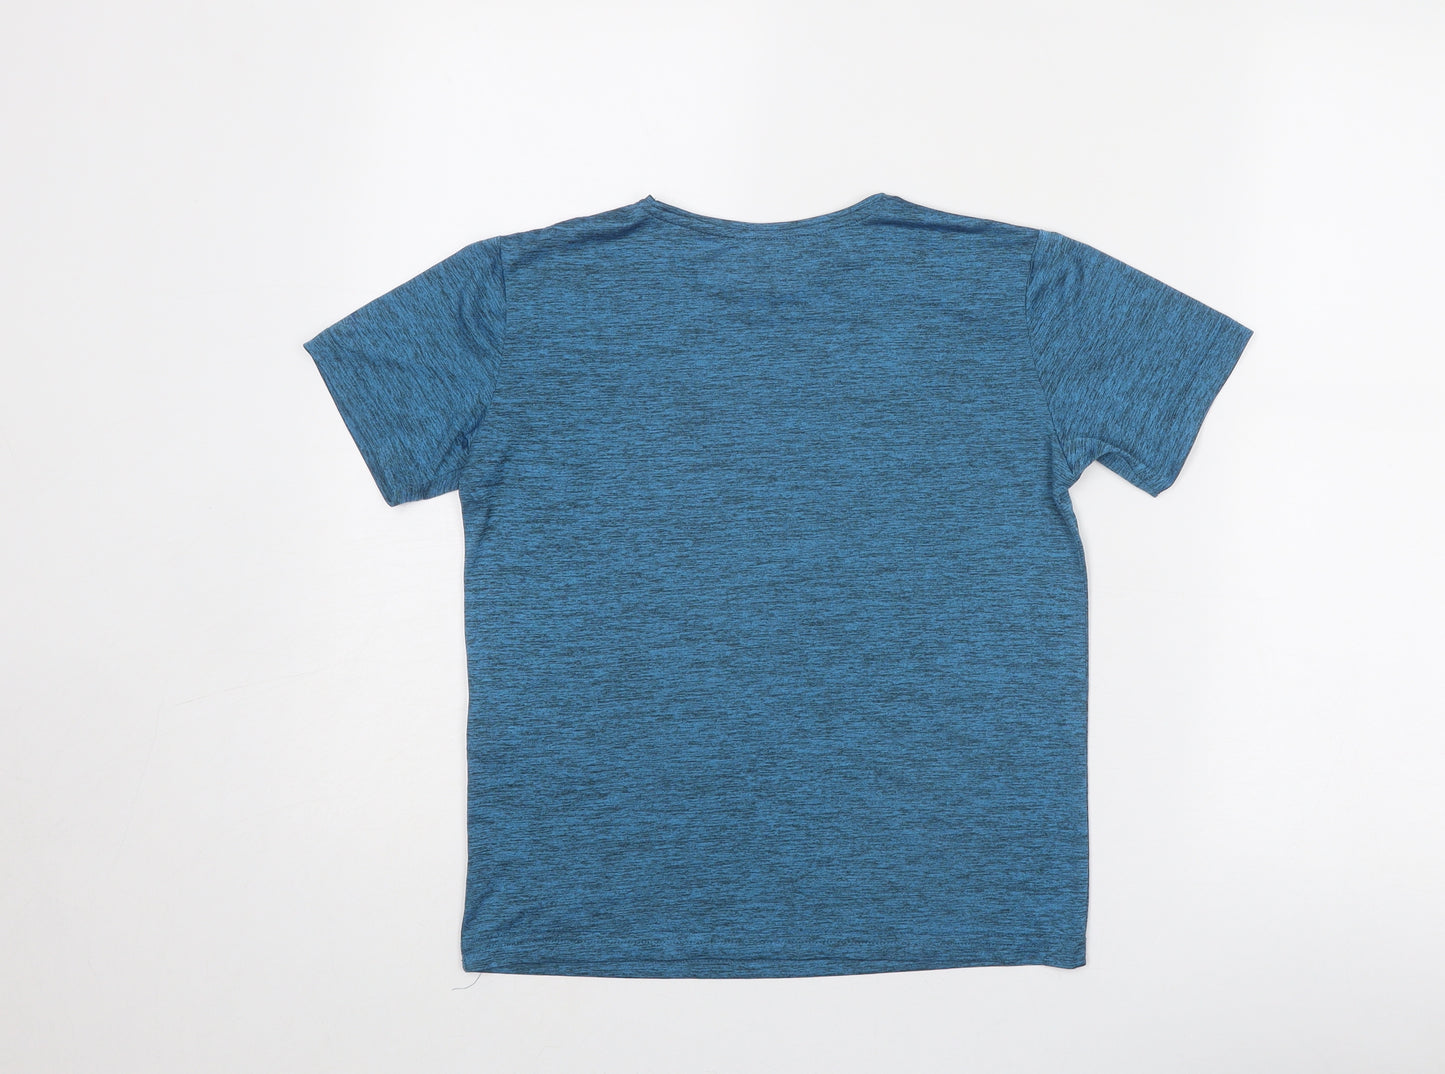 Regatta Boys Blue Polyester Basic T-Shirt Size 11-12 Years Round Neck Pullover